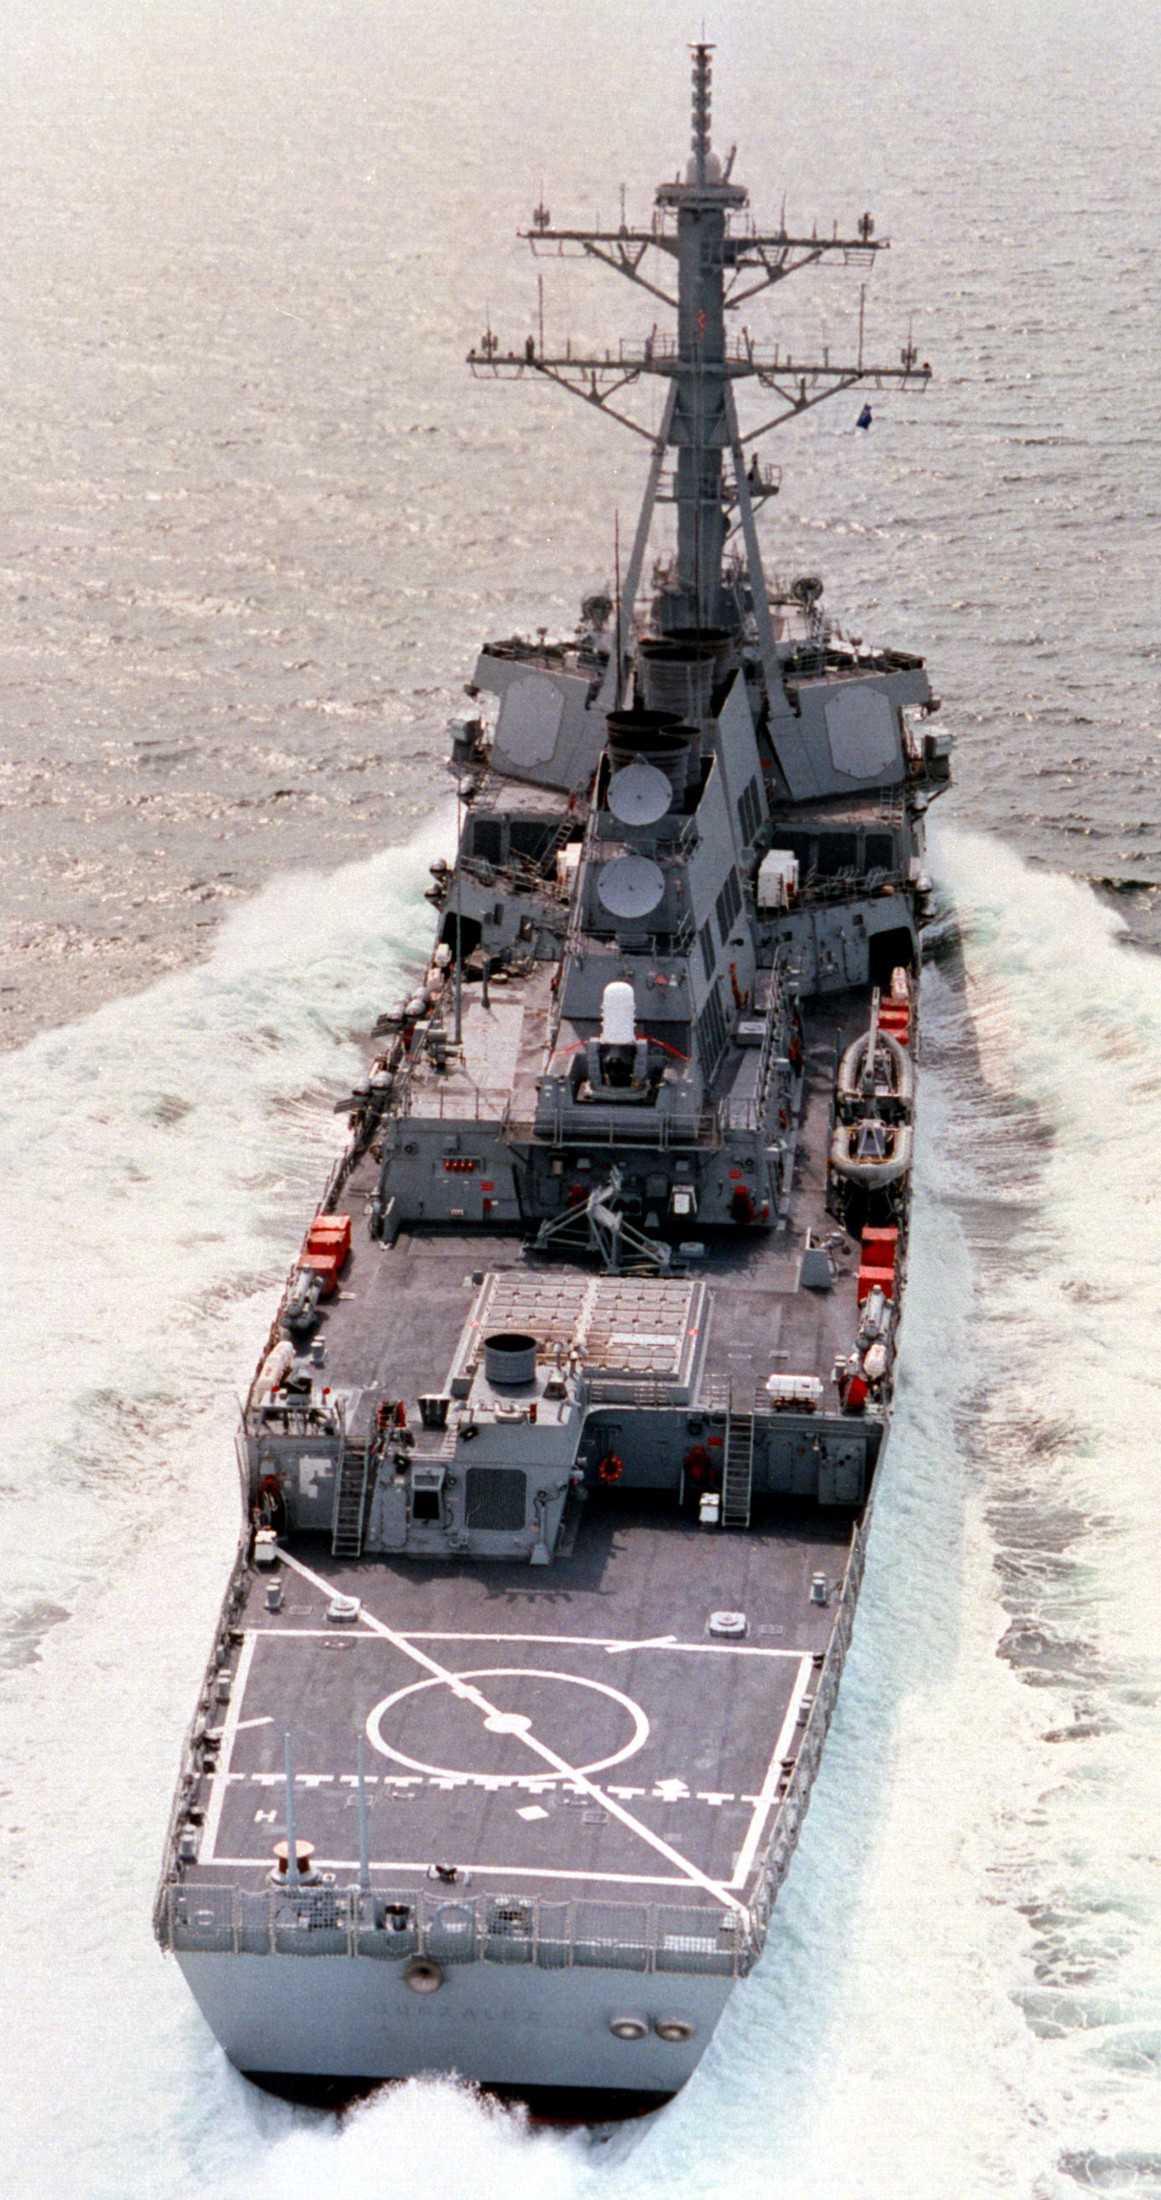 ddg-66 uss gonzalez guided missile destroyer arleigh burke class aegis sea trials bath iron works 60